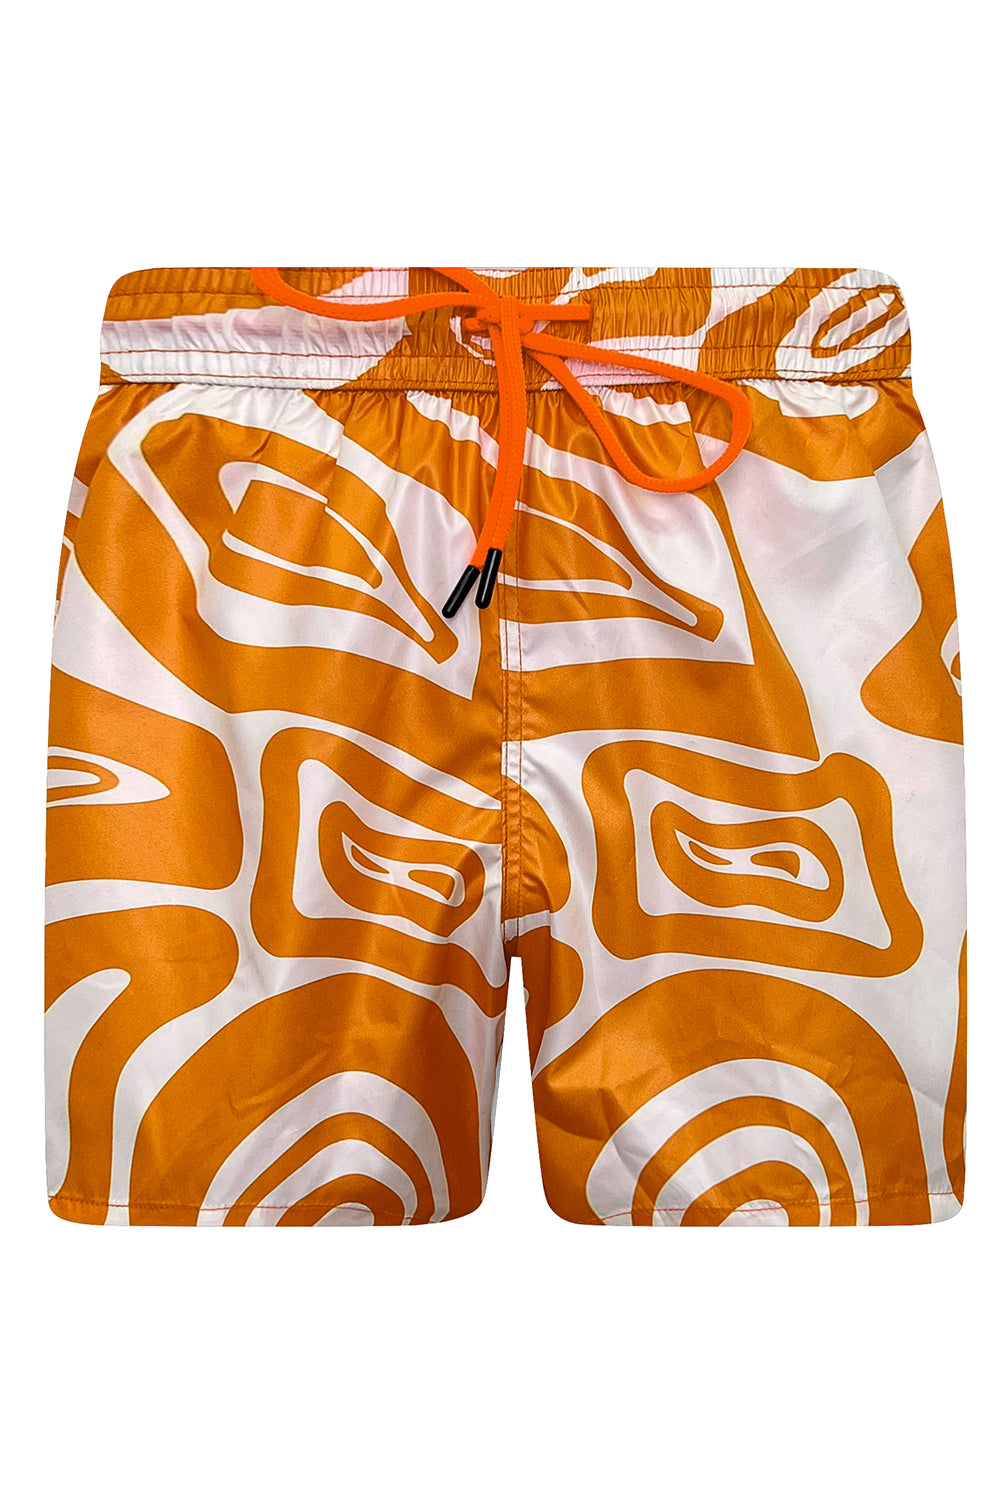 Orange Swirls Patterned Boxer